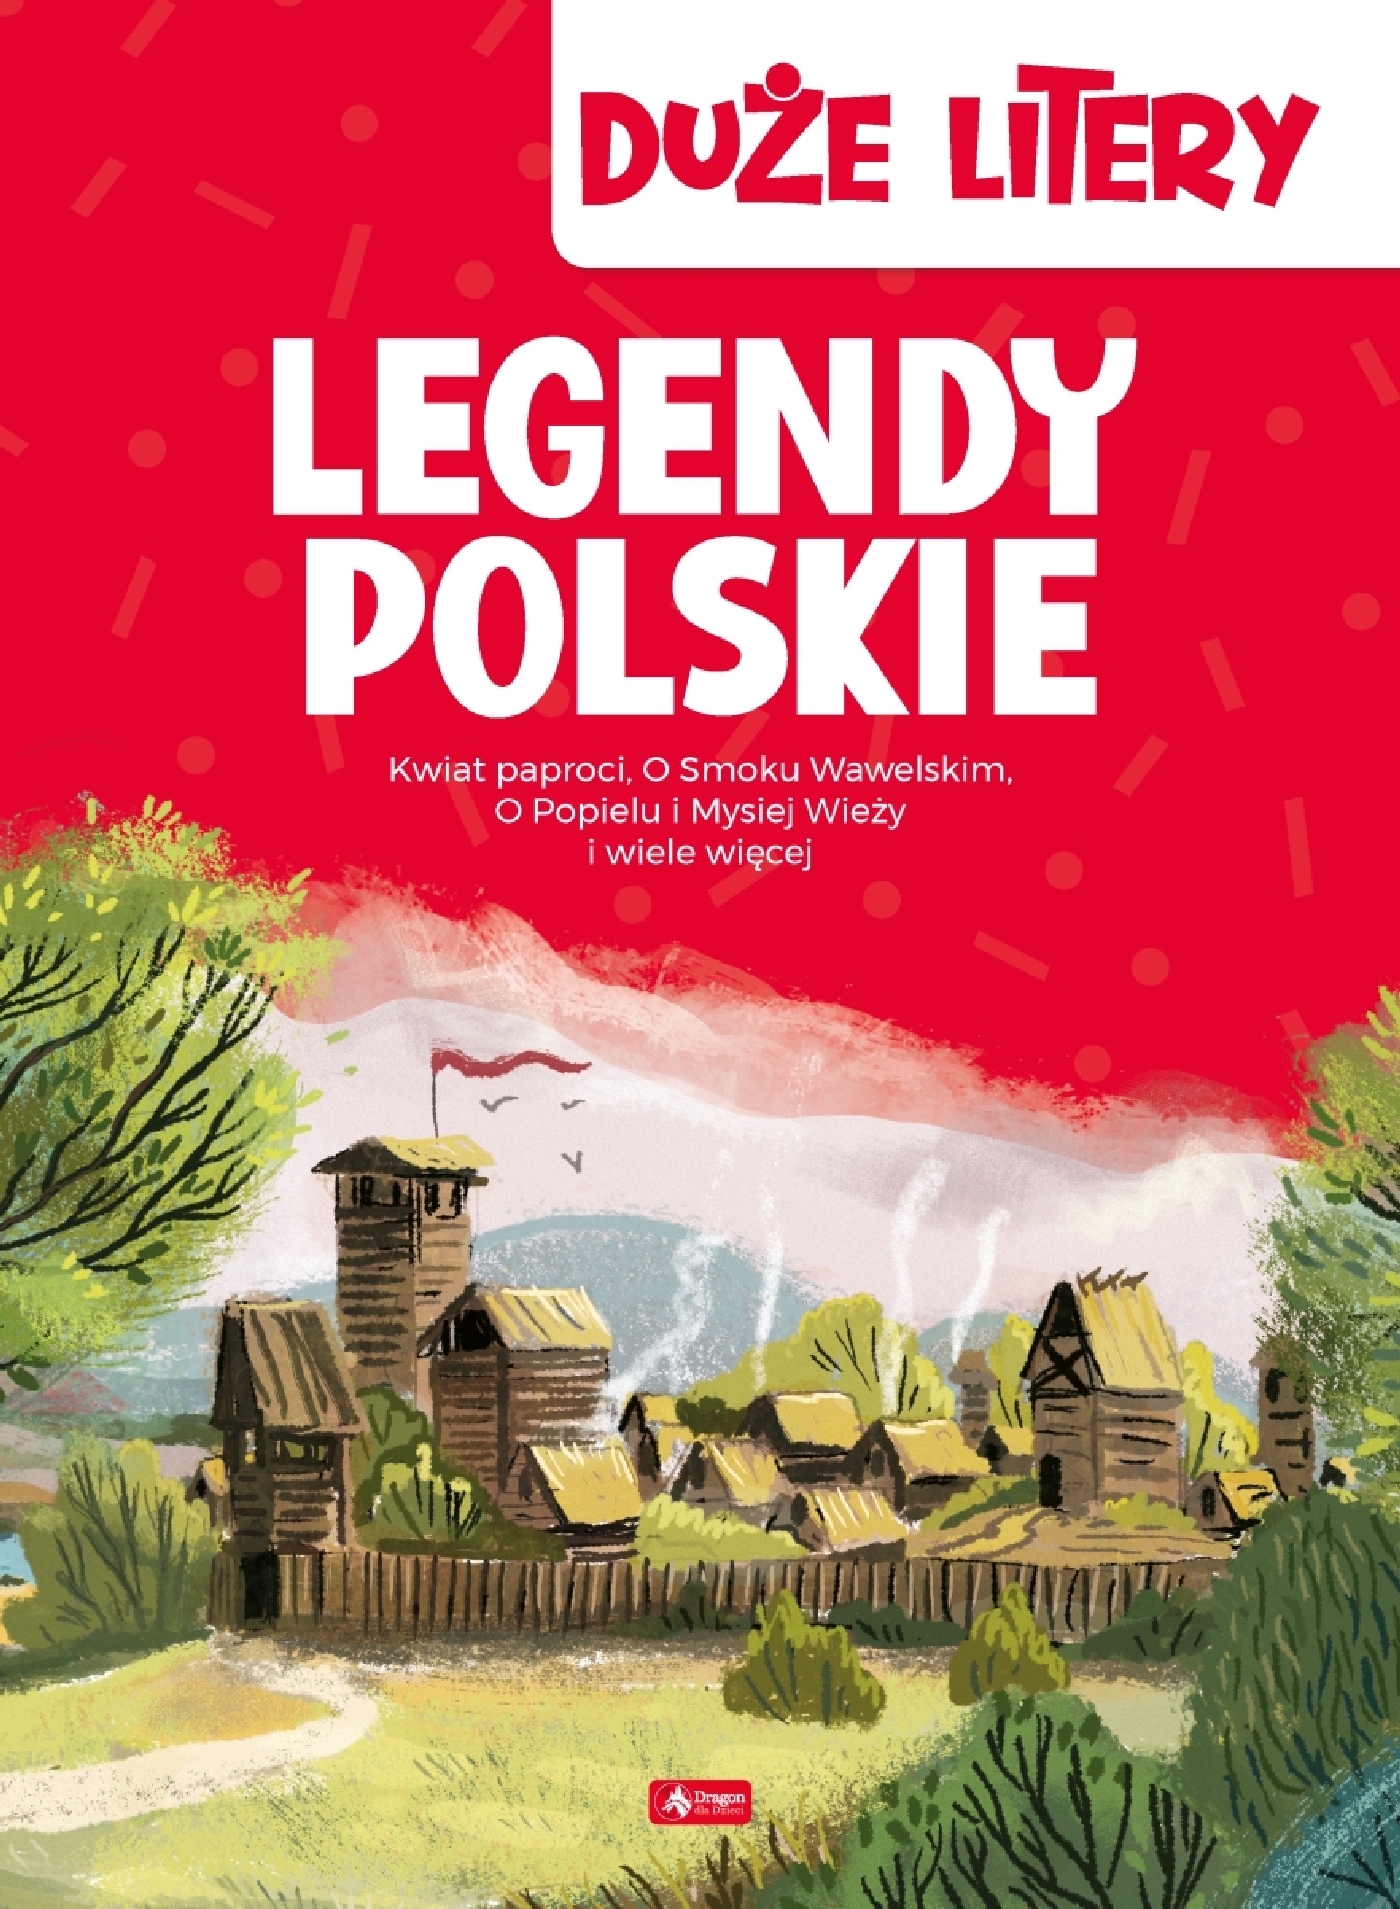 legendy-polskie-ksi-ka-w-ksi-garni-taniaksiazka-pl